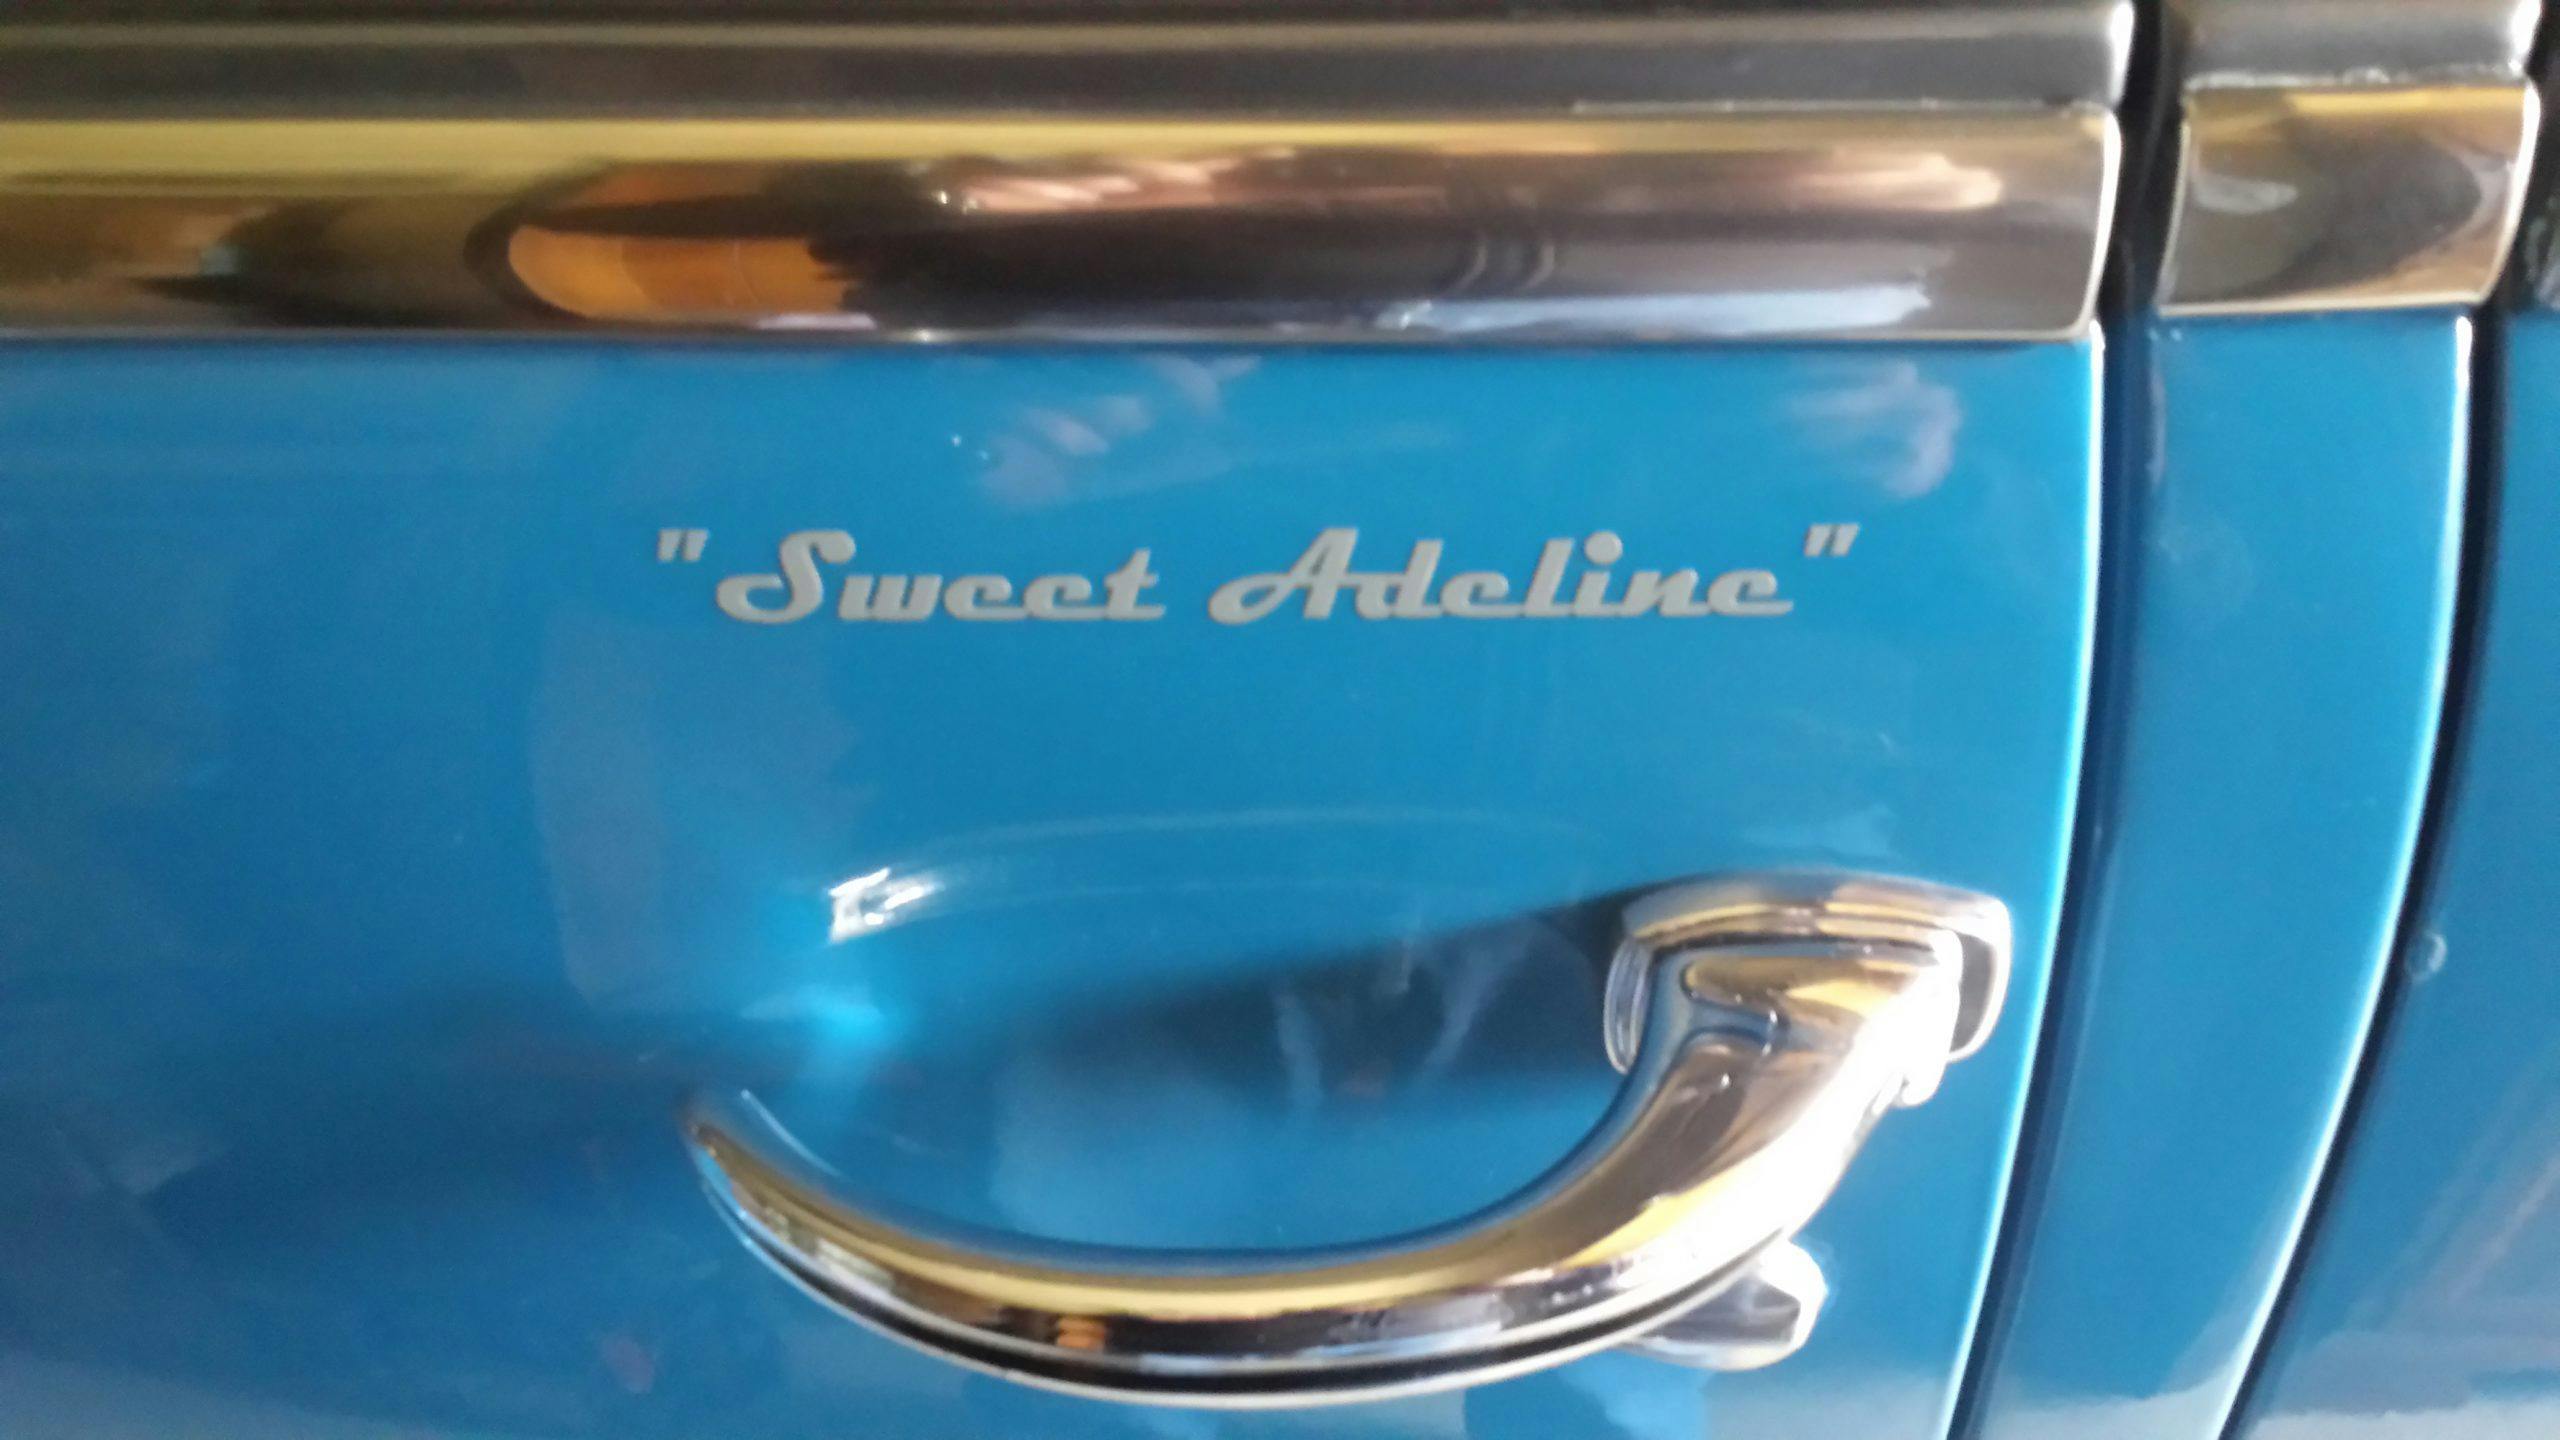 1948 Chevrolet Fleetmaster sweet adeline logo